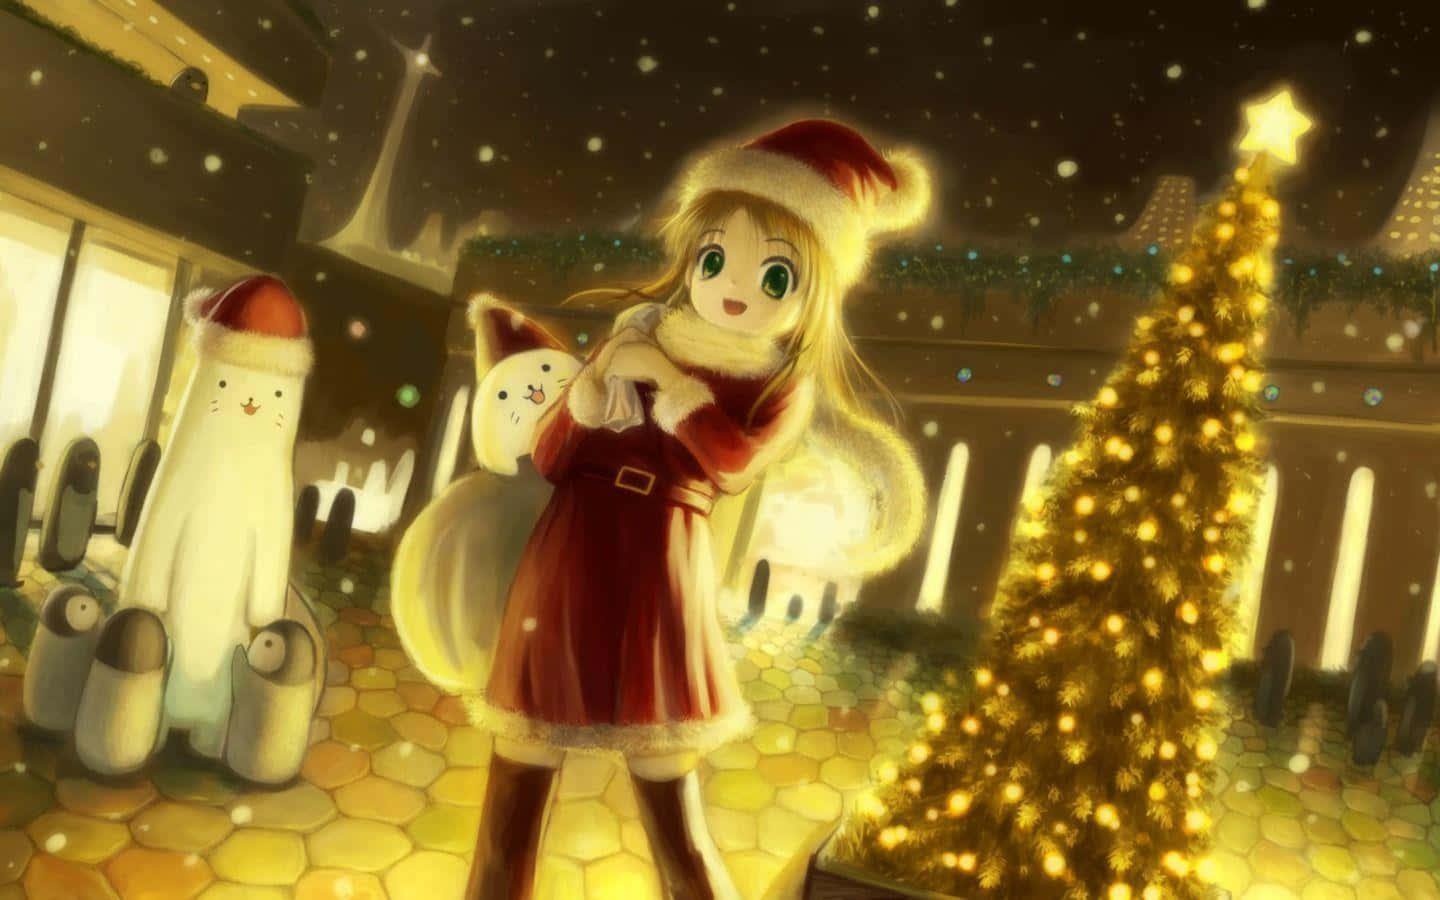 Celebrate the joy of the season with Anime Christmas!